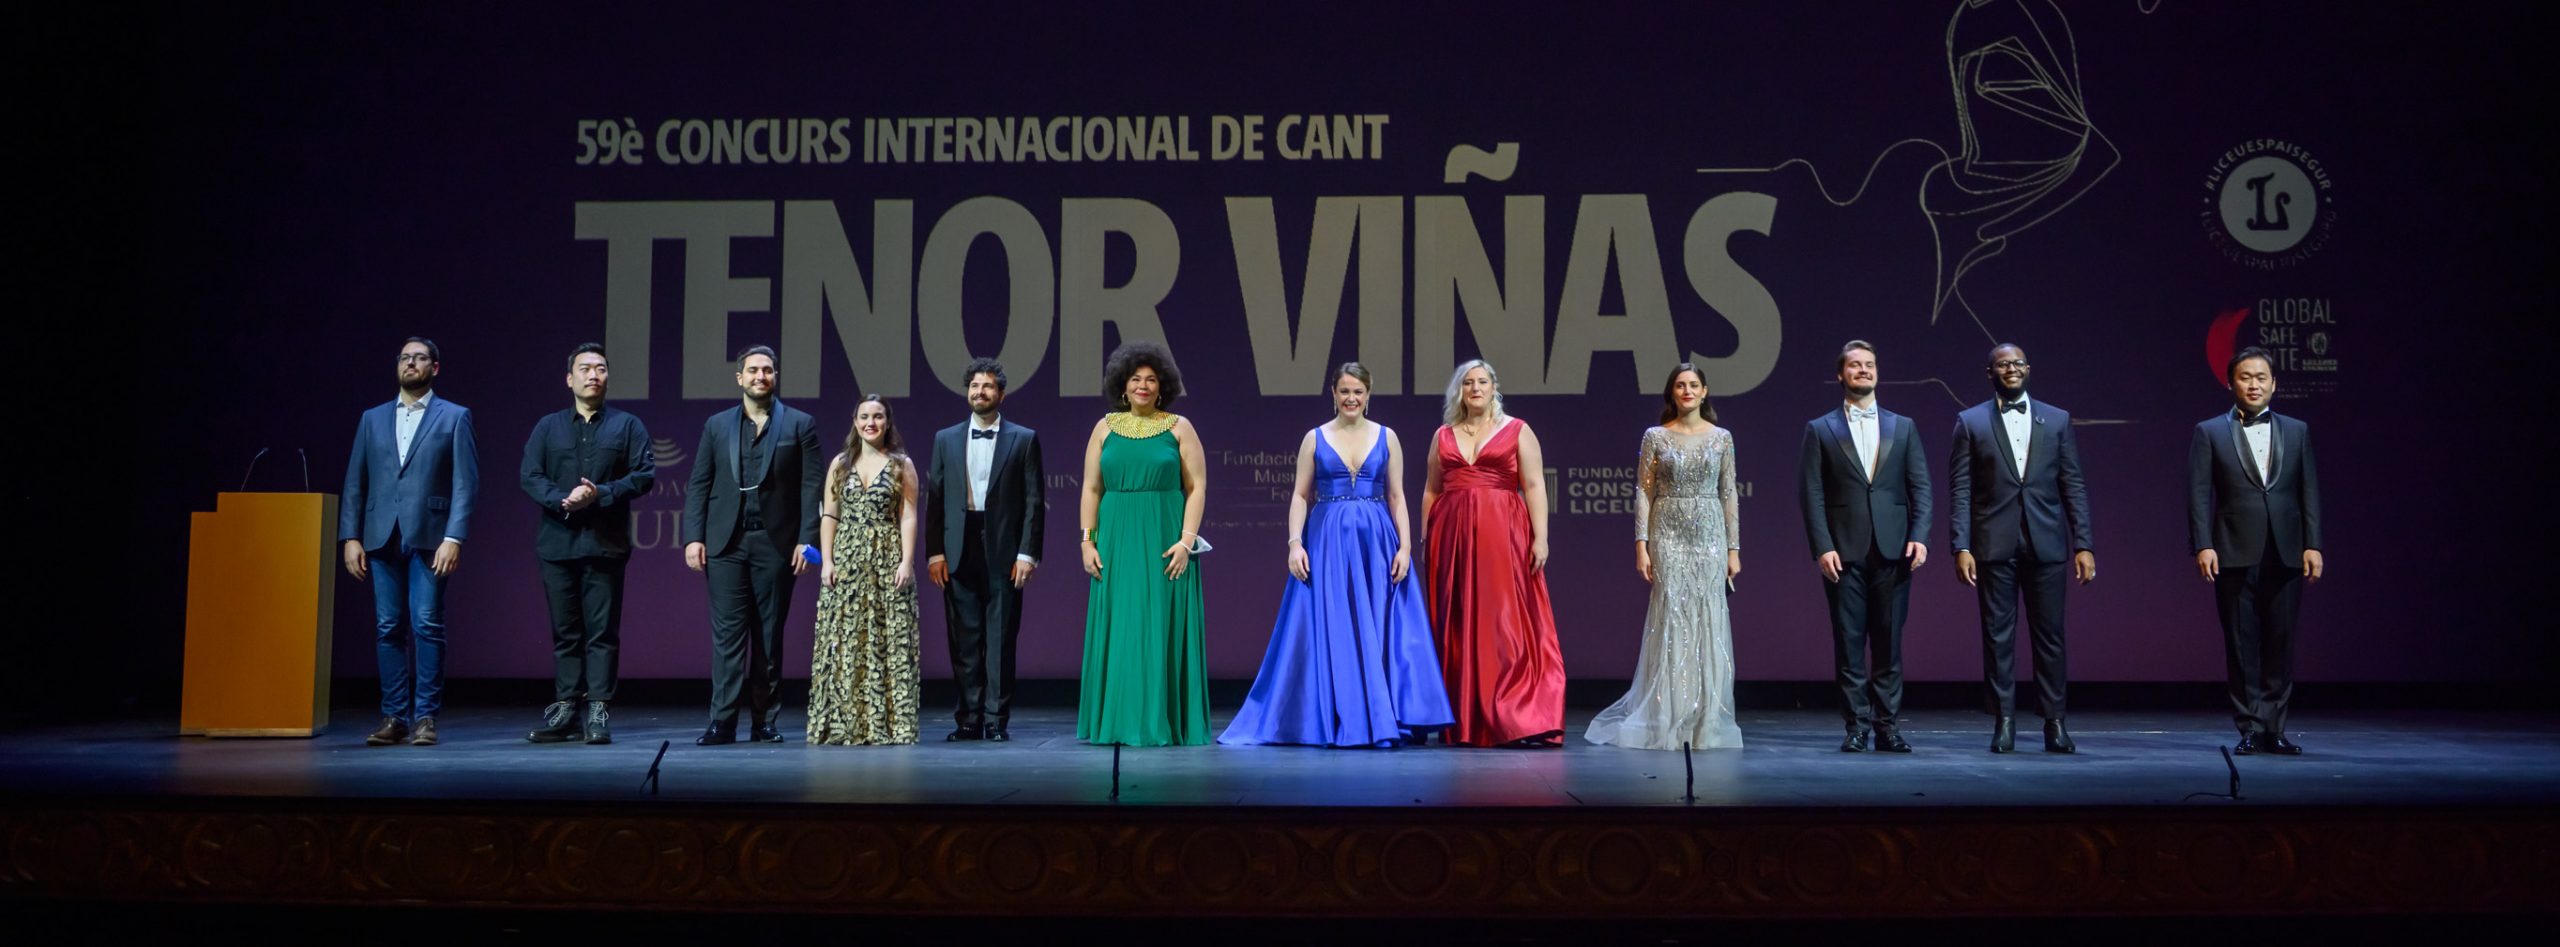 British soprano Gemma Summerfield wins the Tenor Viñas first prize